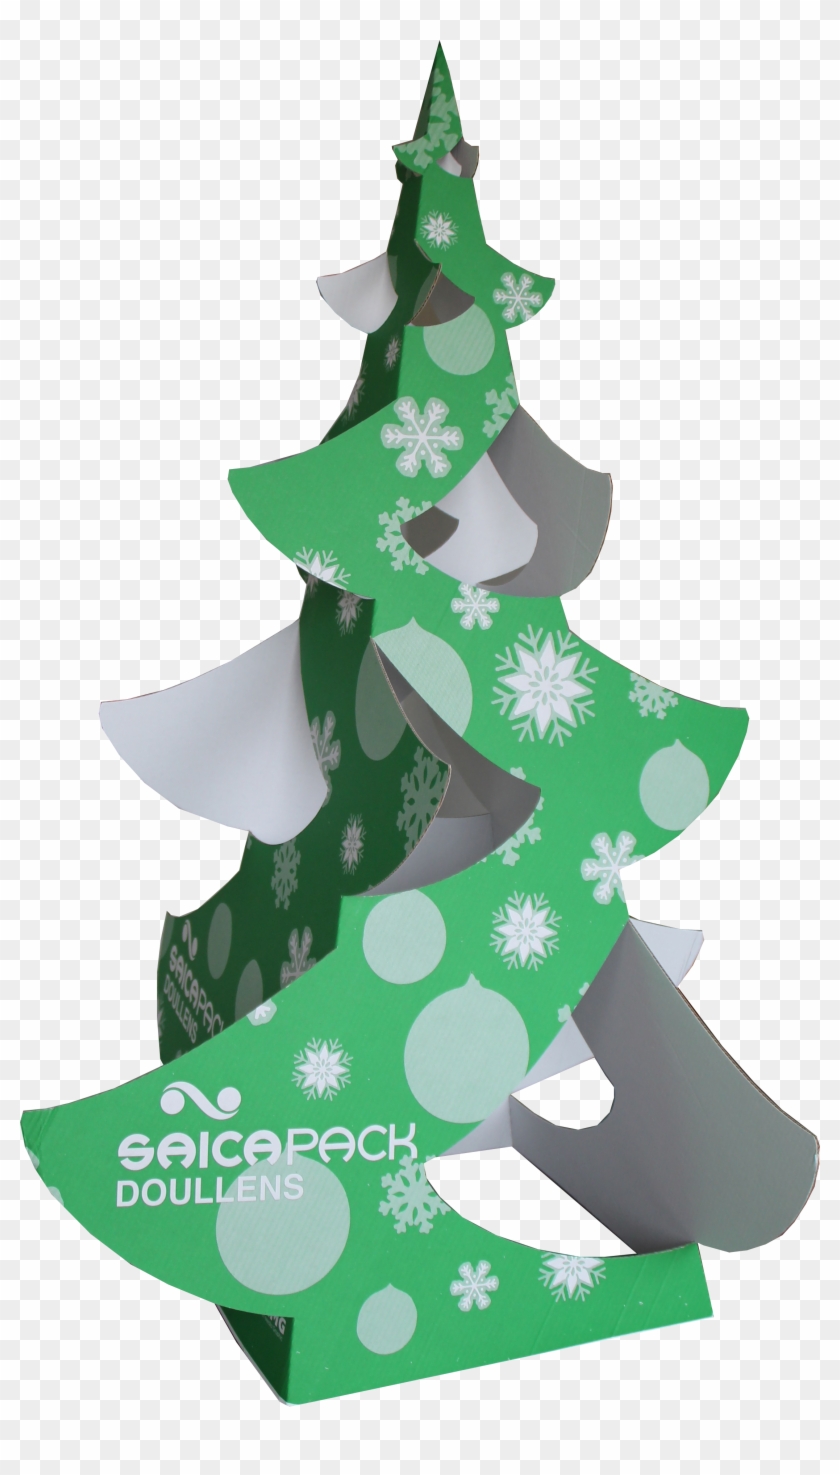 Saica Pack Doullens Christmas Tree - Christmas Tree #1336358